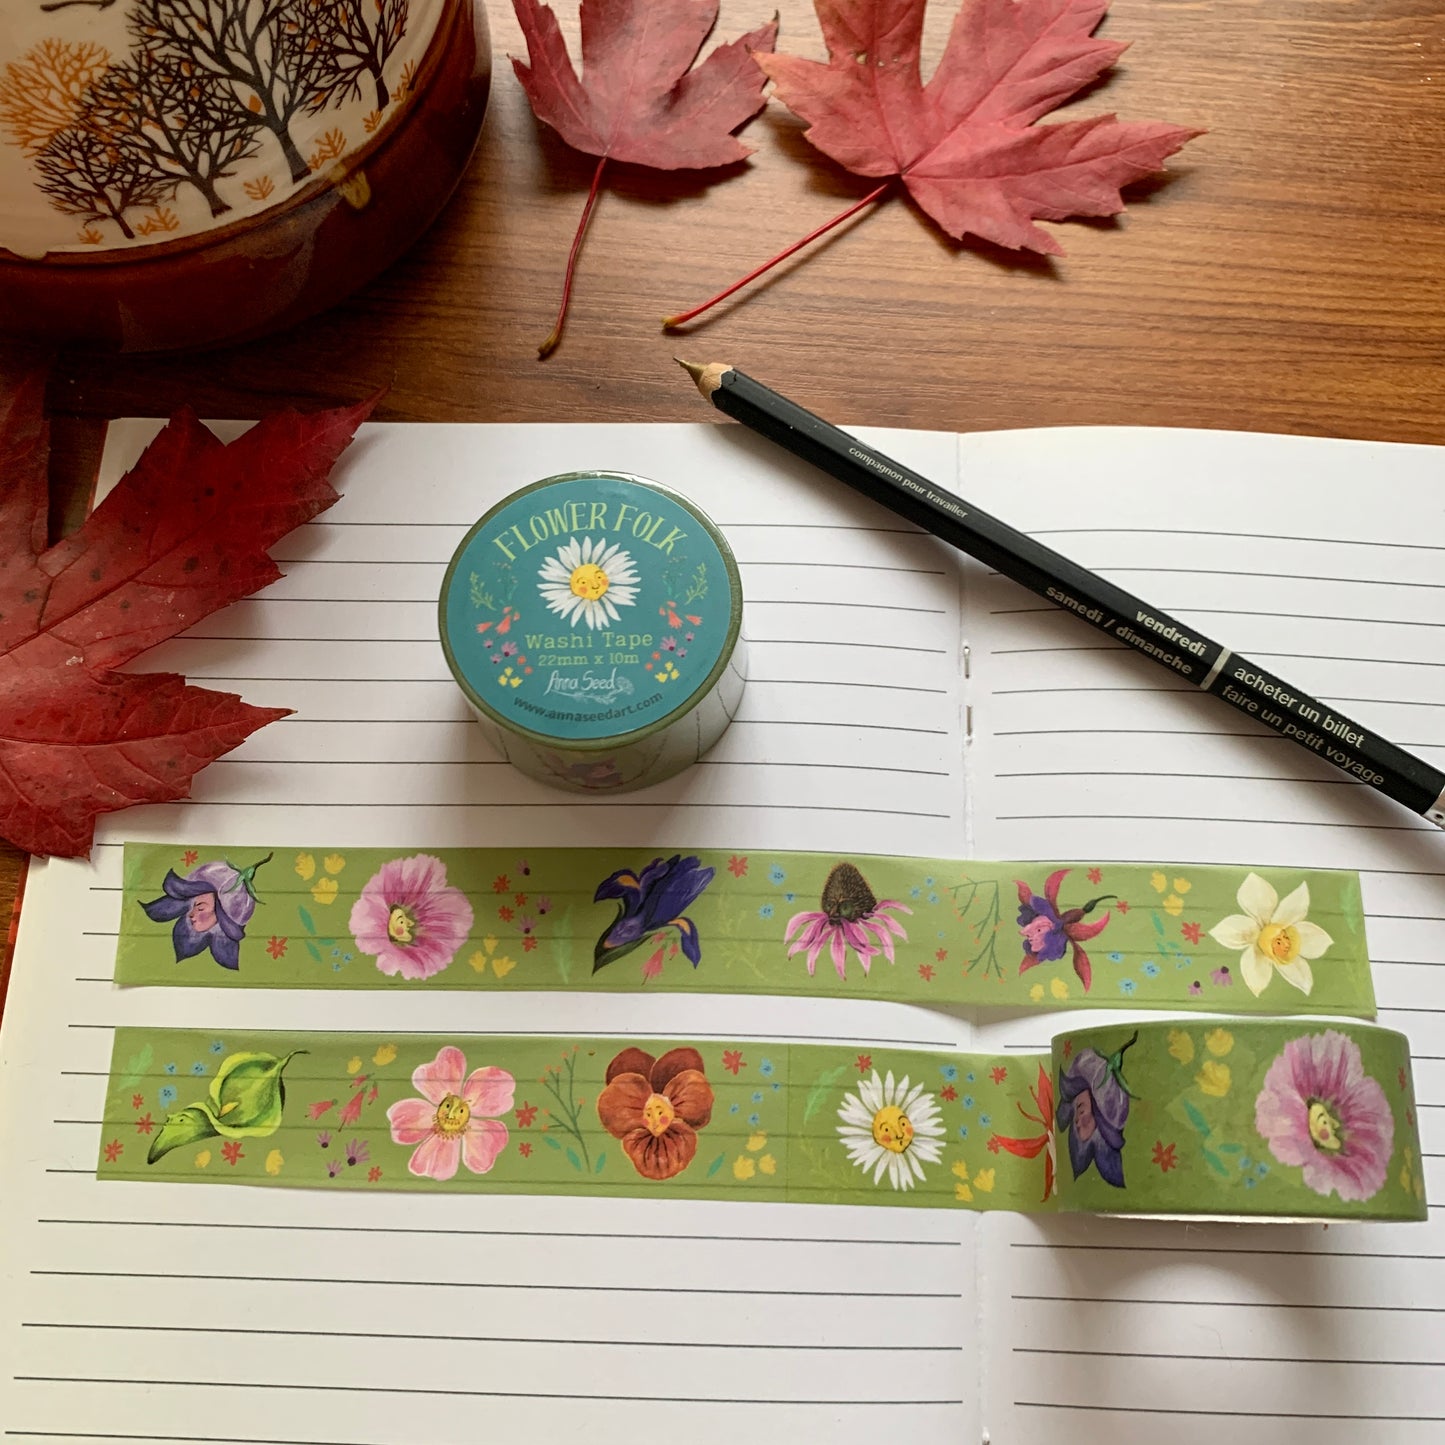 Anna Seed Art | Washi Tape - Flower Folk. Illustrated paper tape